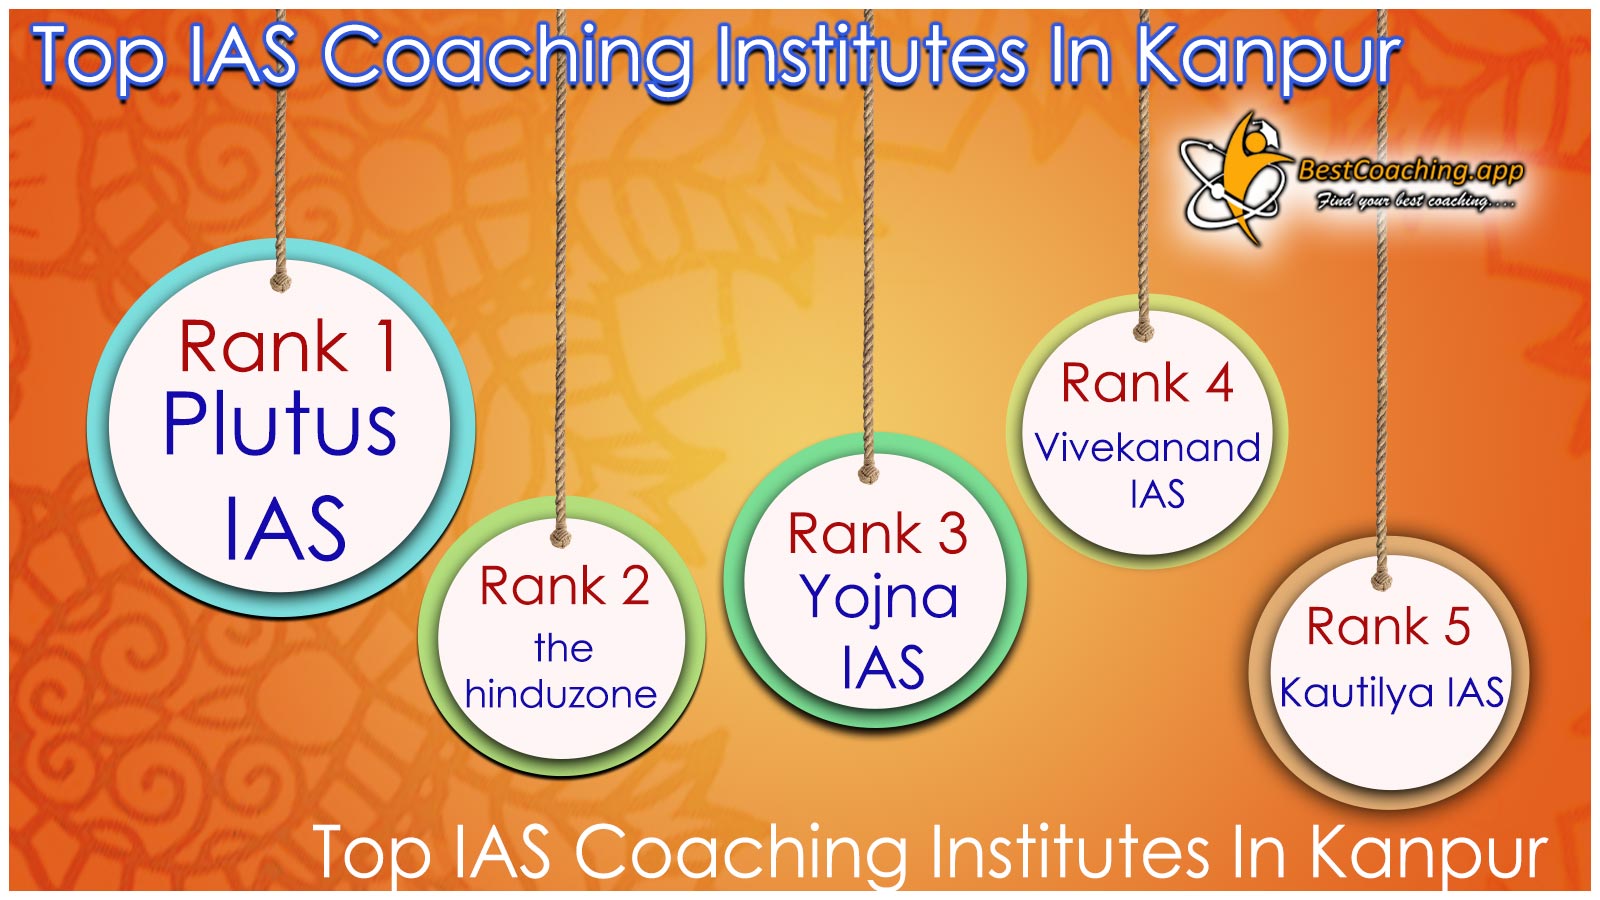 Top IAS Coaching Institutes In Kanpur 